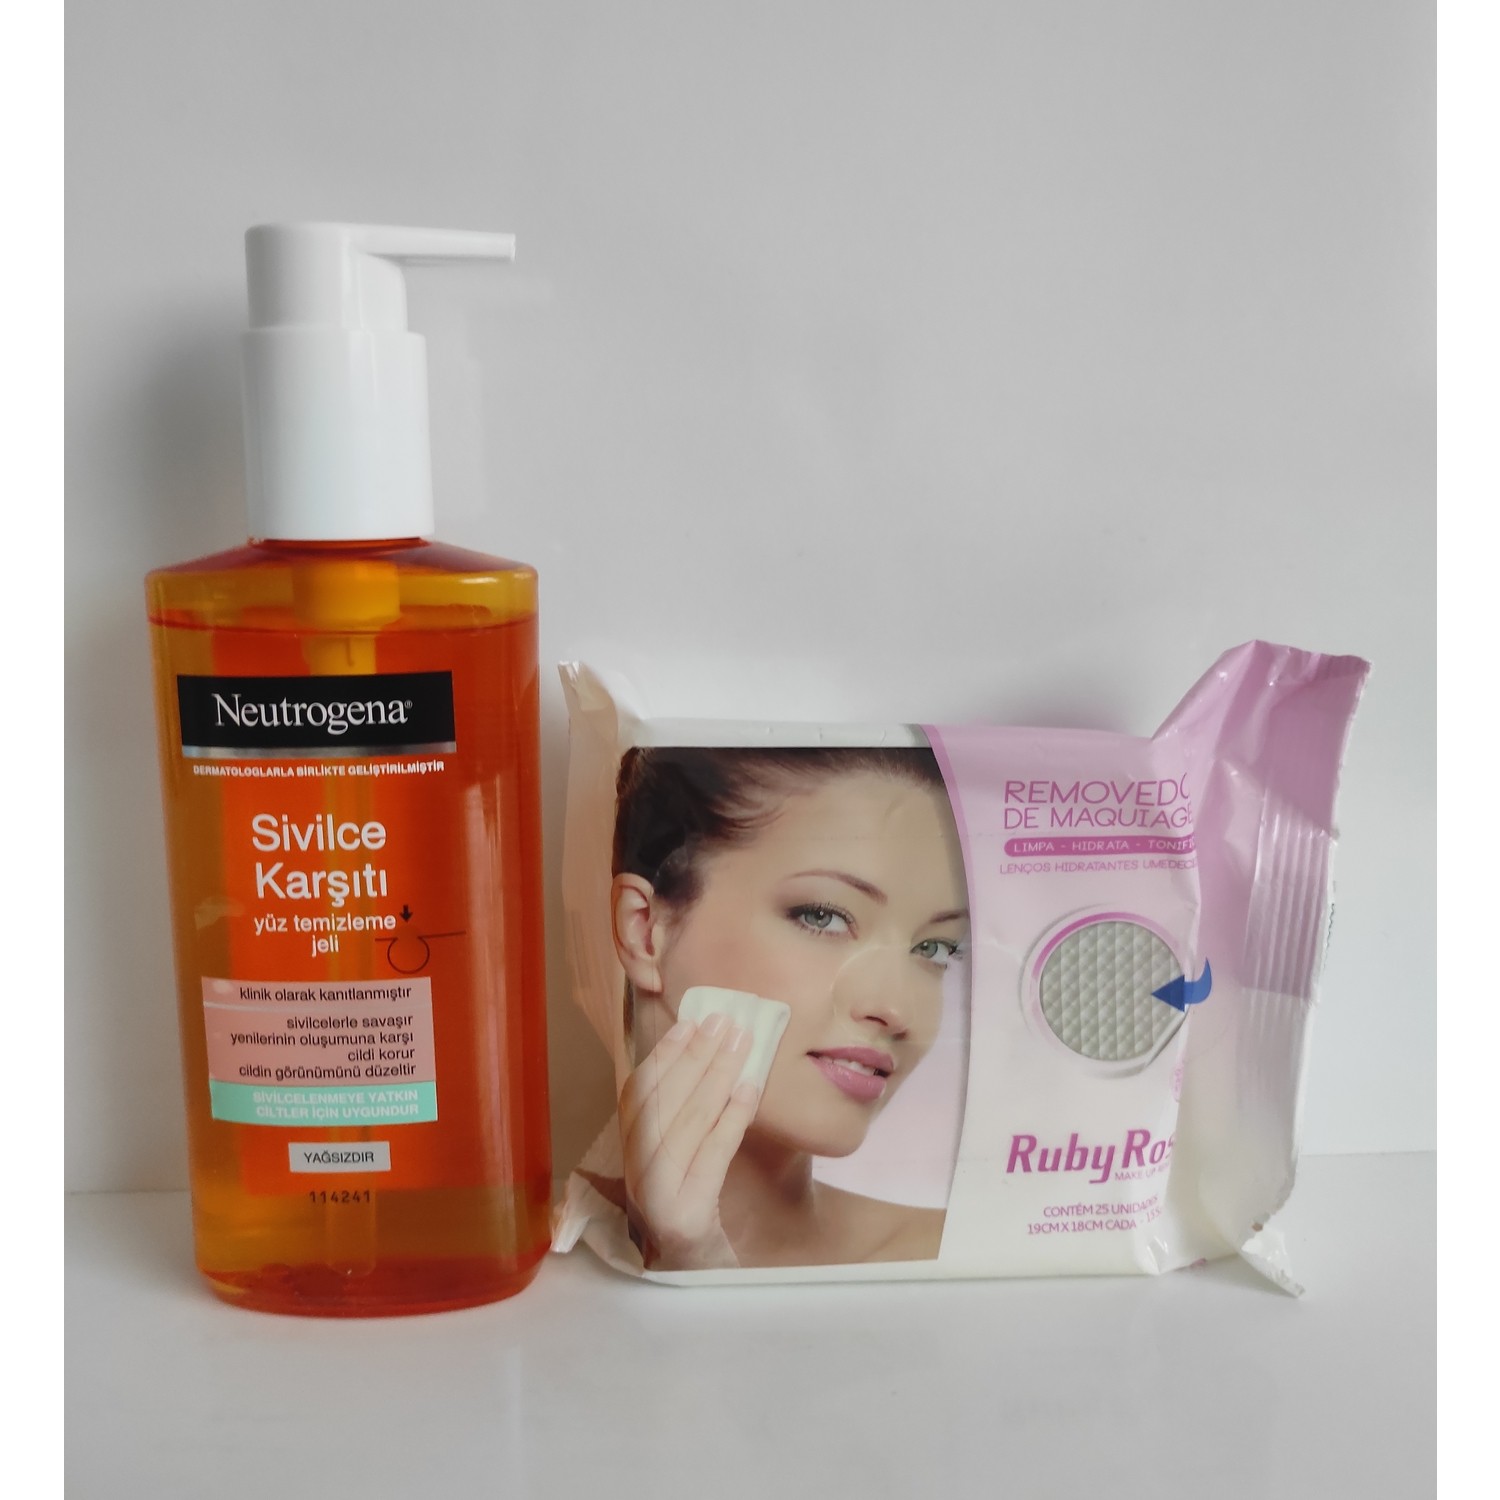 Очищающий гель для лица Neutrogena 200 мл + Салфетки для снятия макияжа Ruby Rose